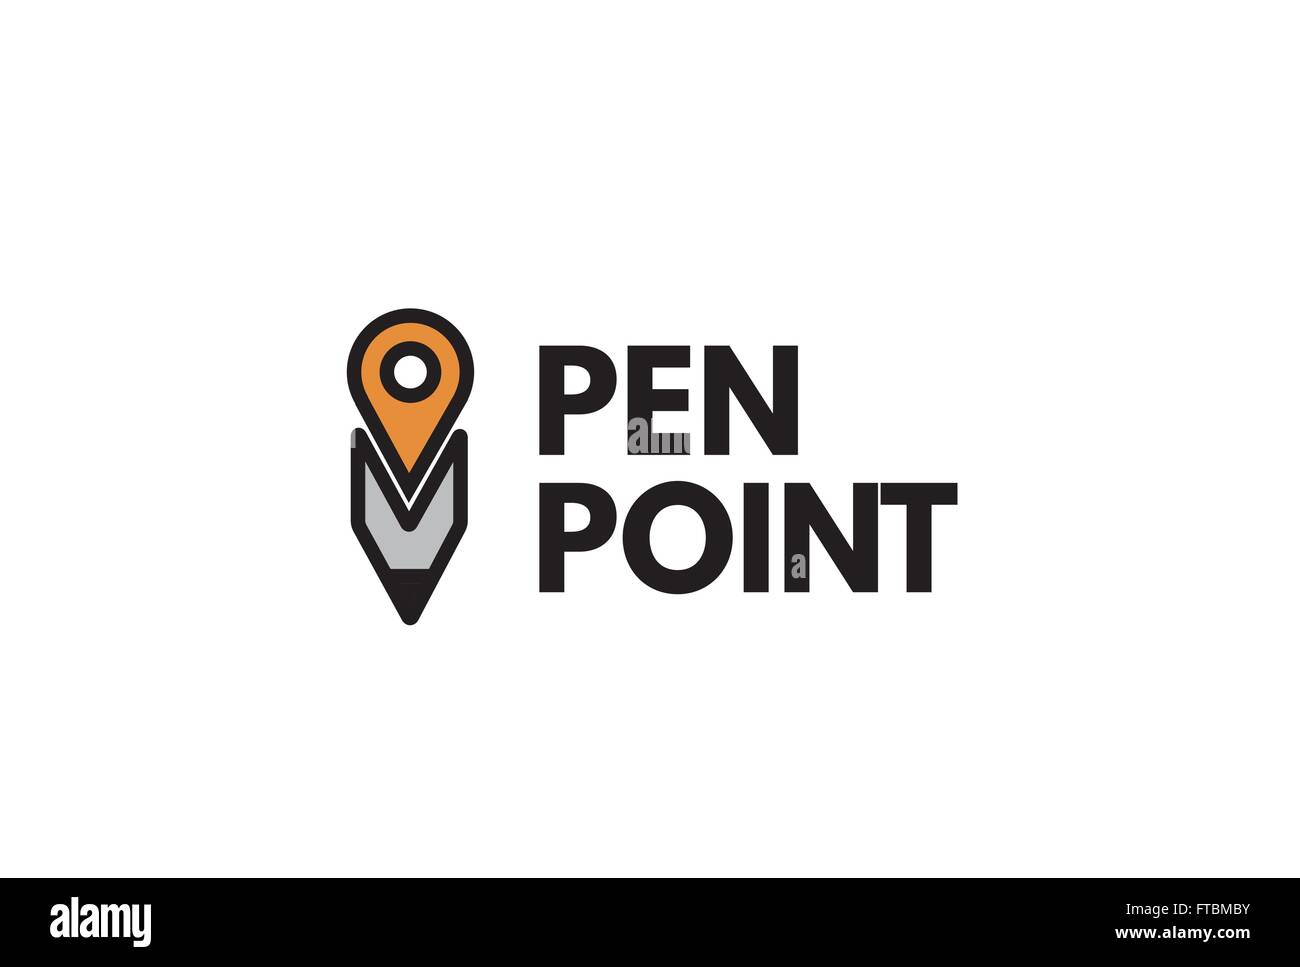 Pen Point Design Illustration Stock Vector